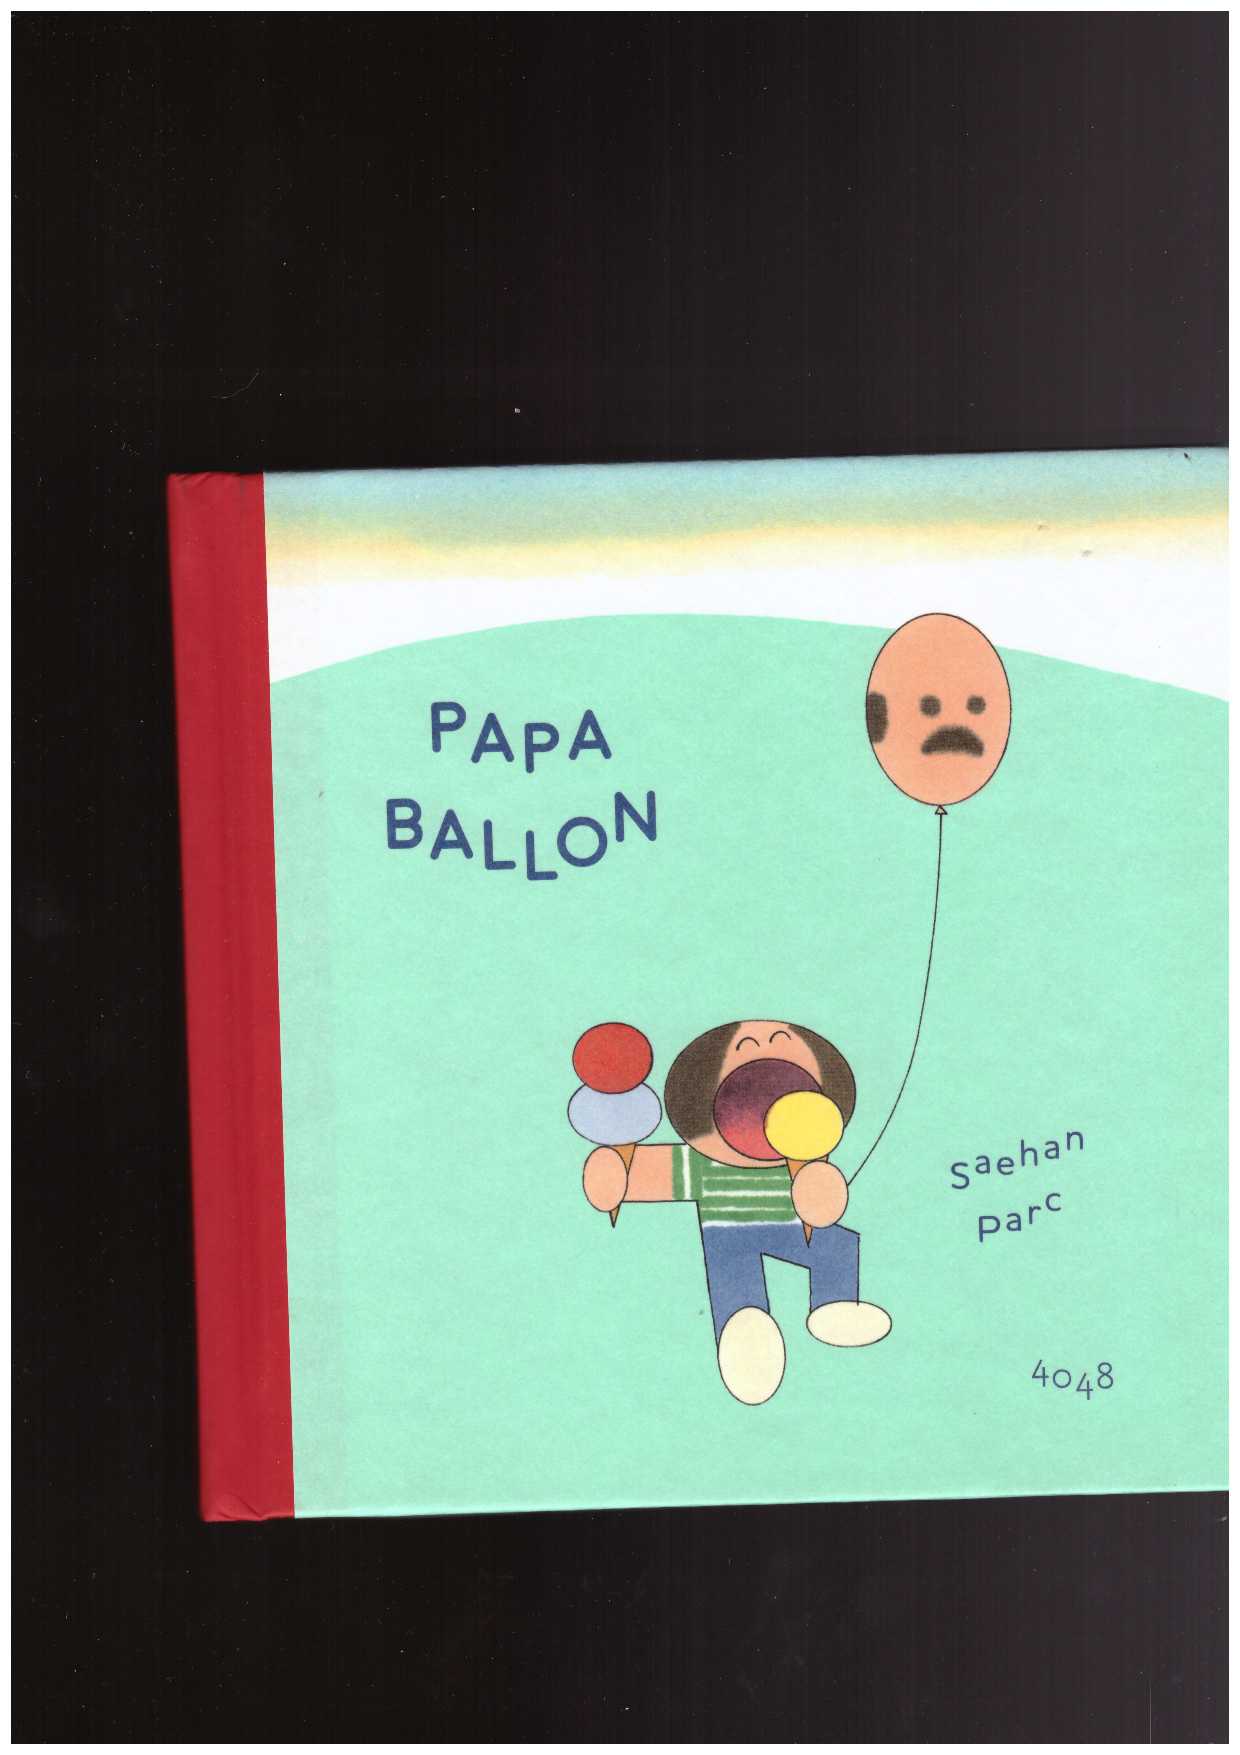 PARC, Saehan - Papa Ballon